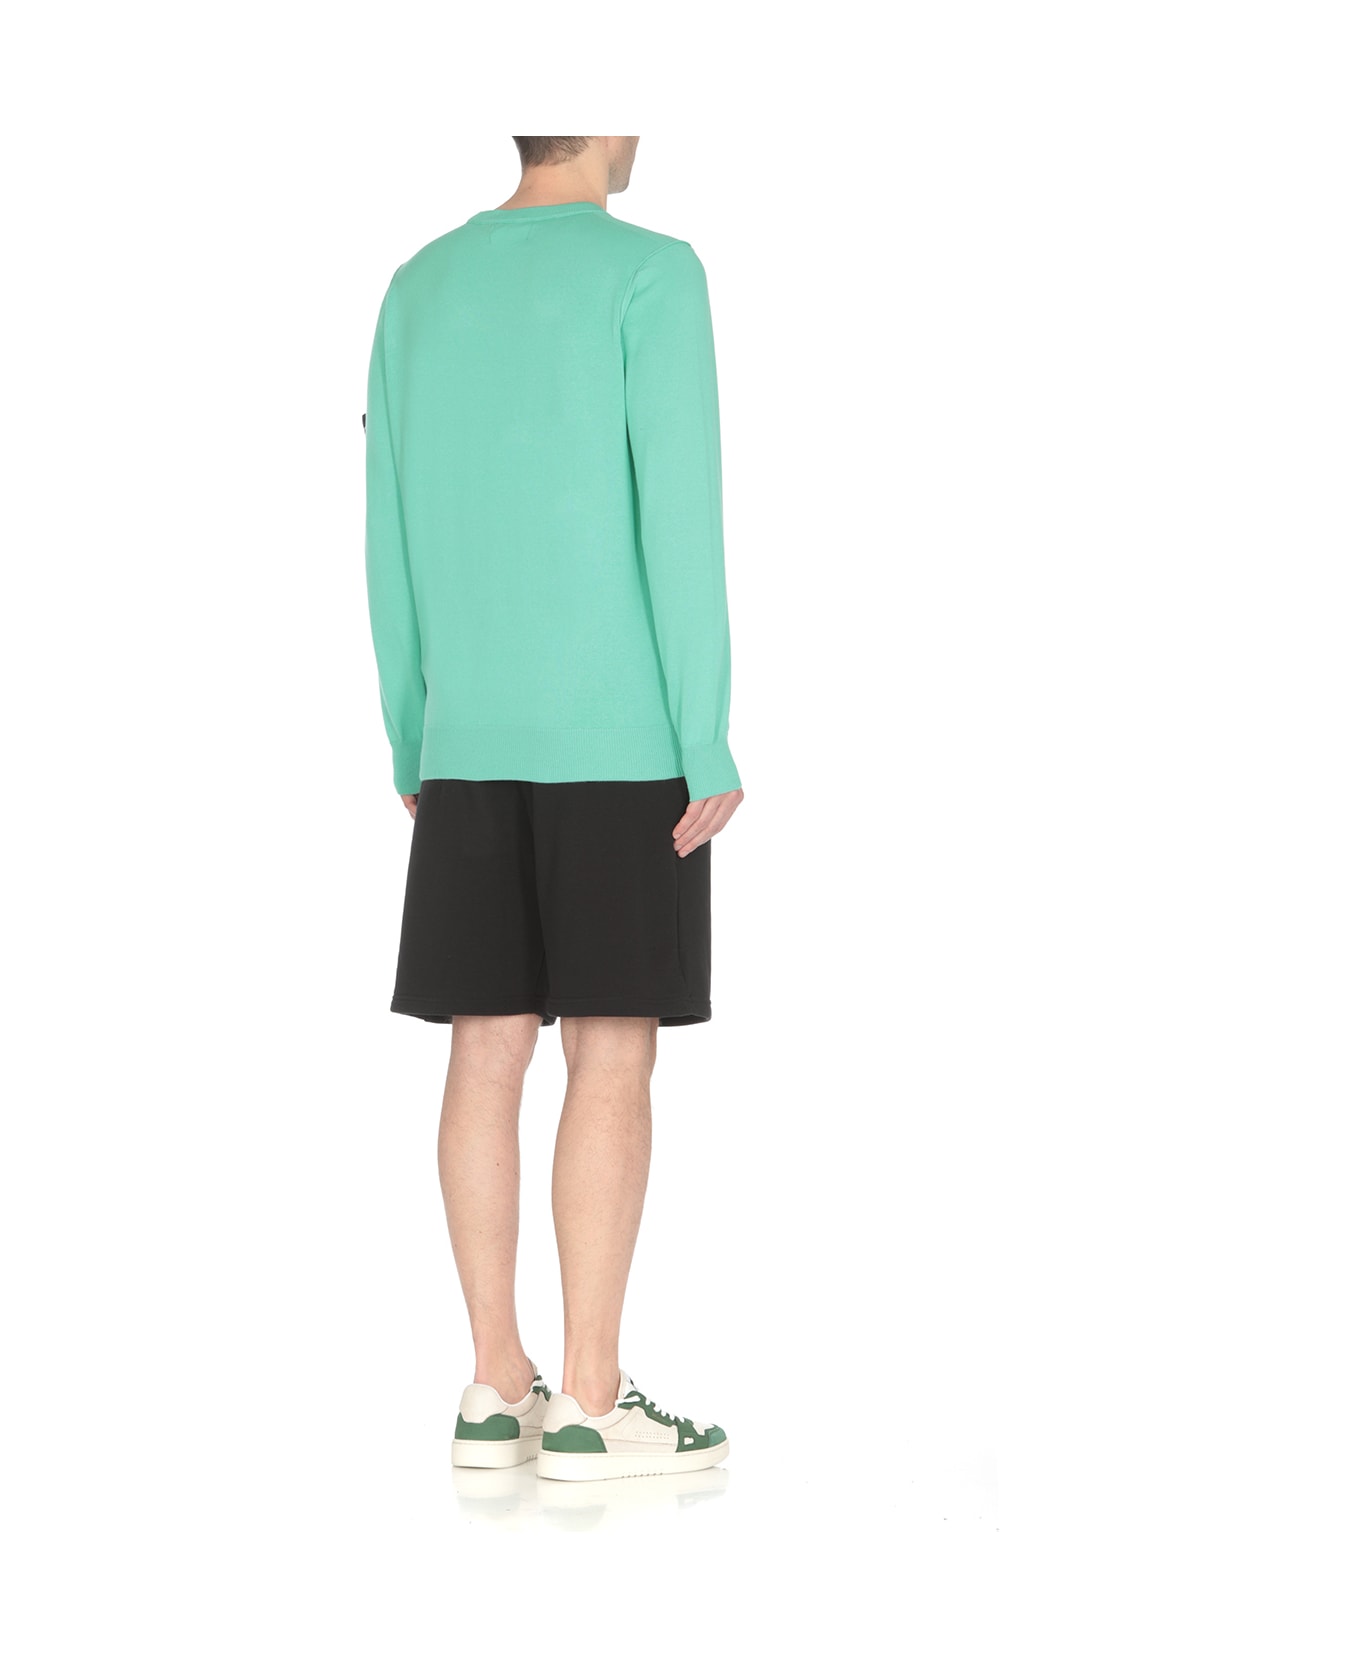 Stone Island Cotton Sweater - Verde chiaro ニットウェア